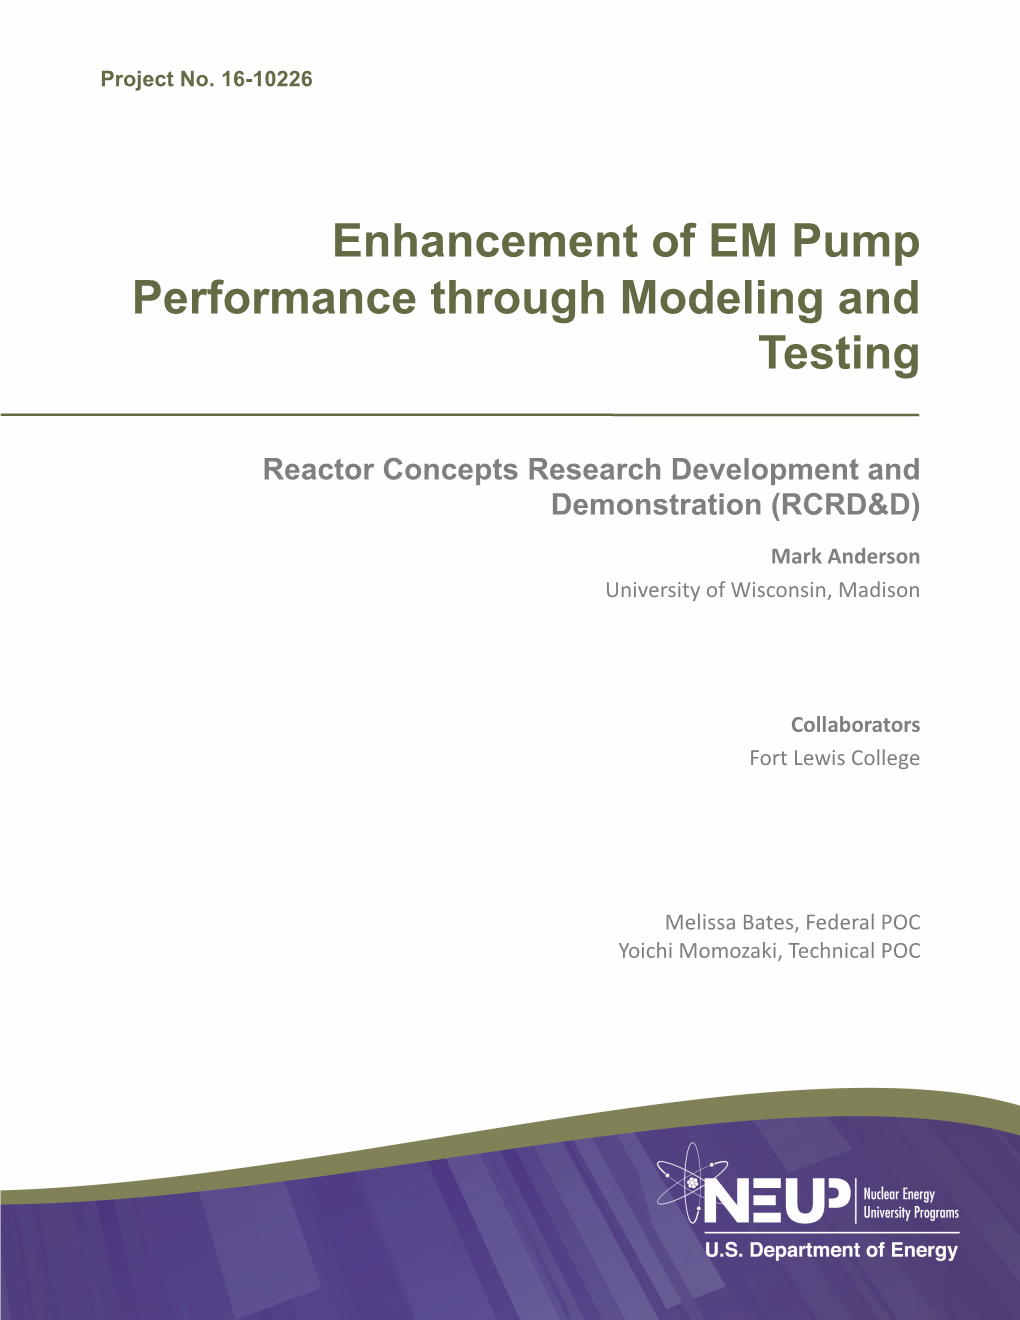 Enhancement of EM Pump Performance Through Modeling and Testing